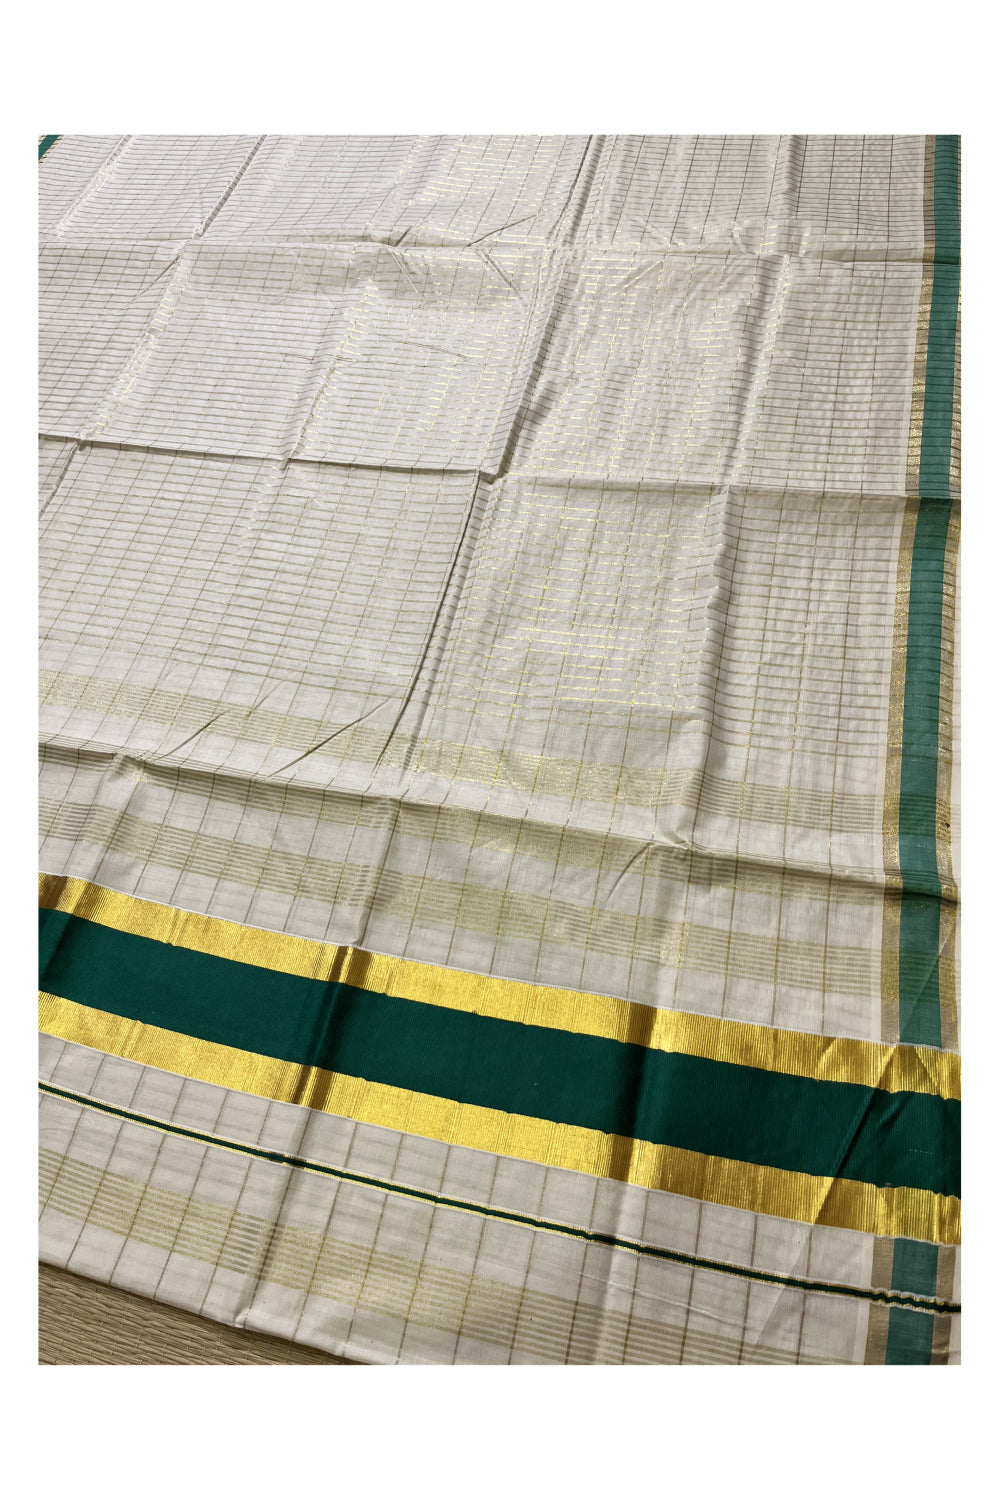 Kerala Pure Cotton Kasavu Check Designs Saree with Green Border